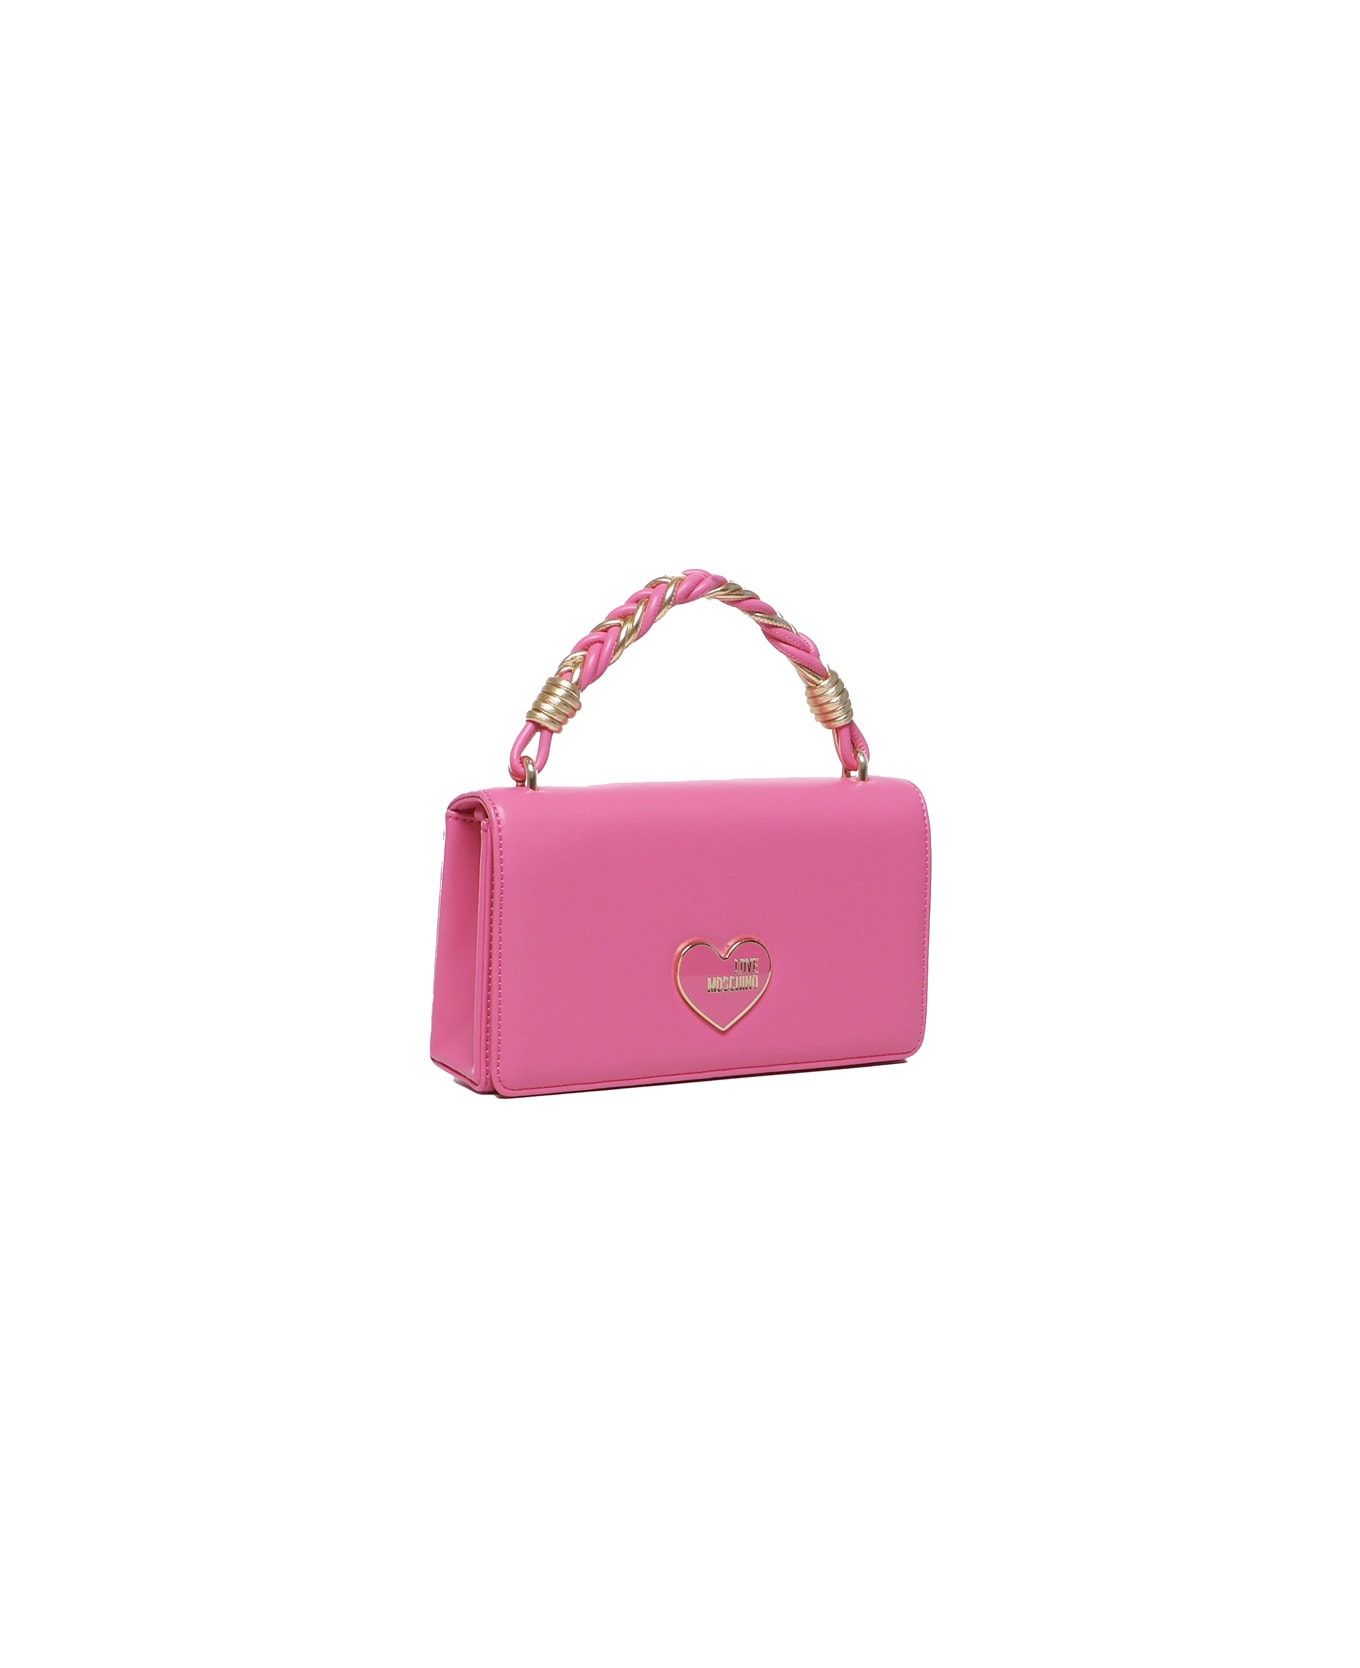 Love Moschino Handheld Handbag With Chain Shoulder Strap - Fuxia